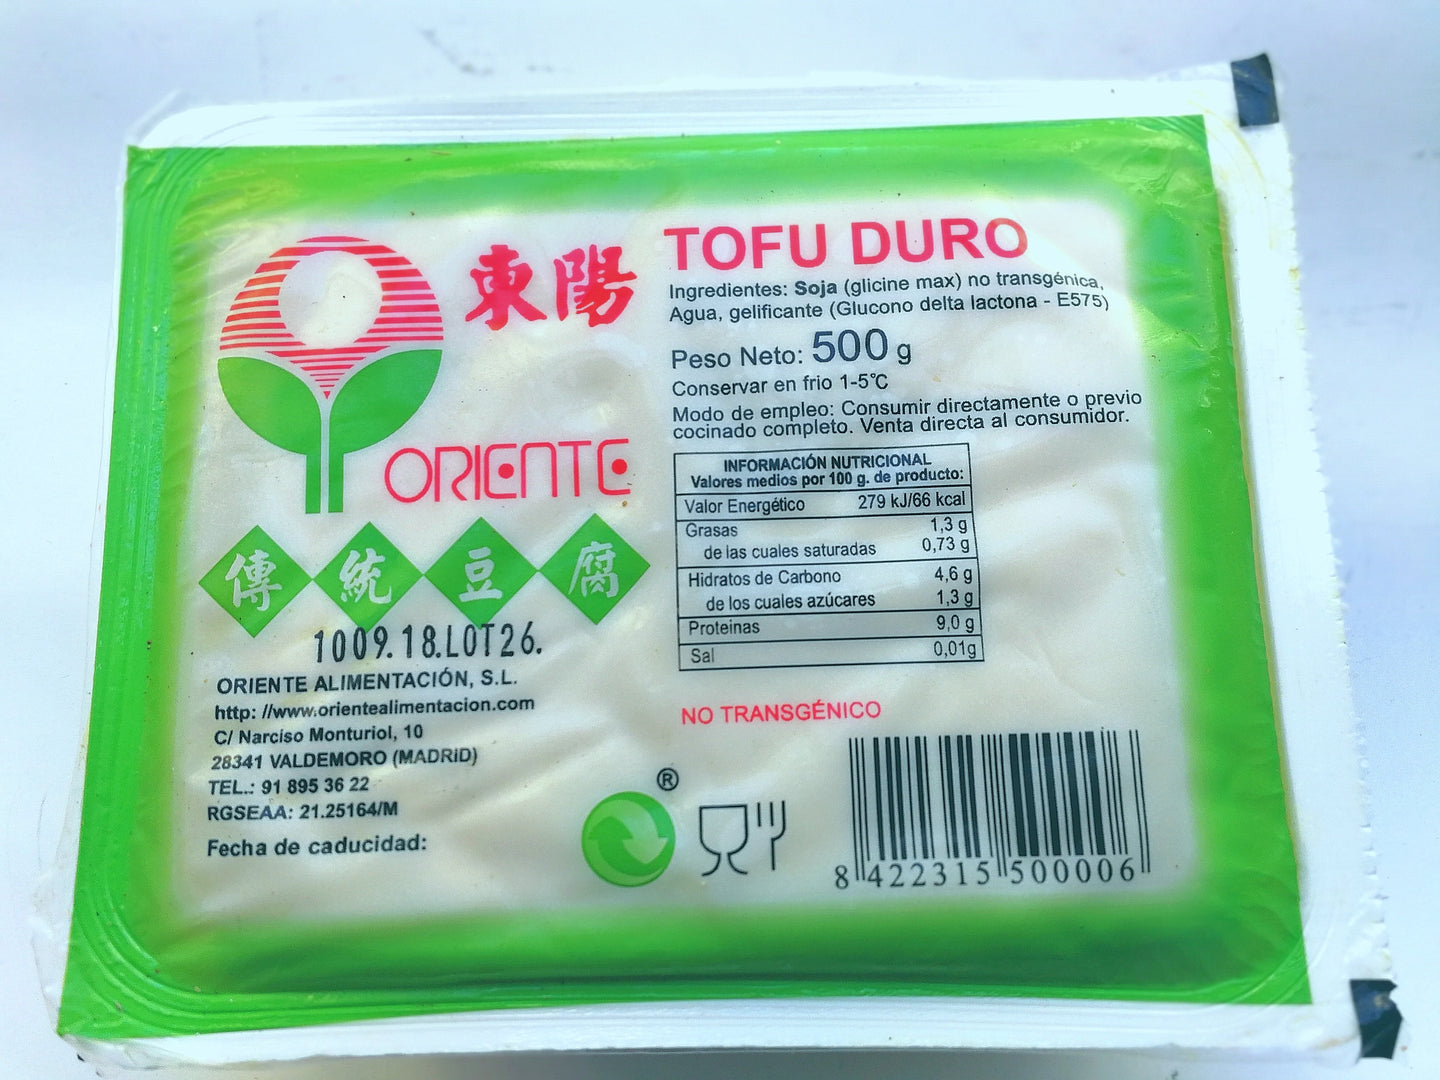 硬豆腐500g(Tofu duro 500g)